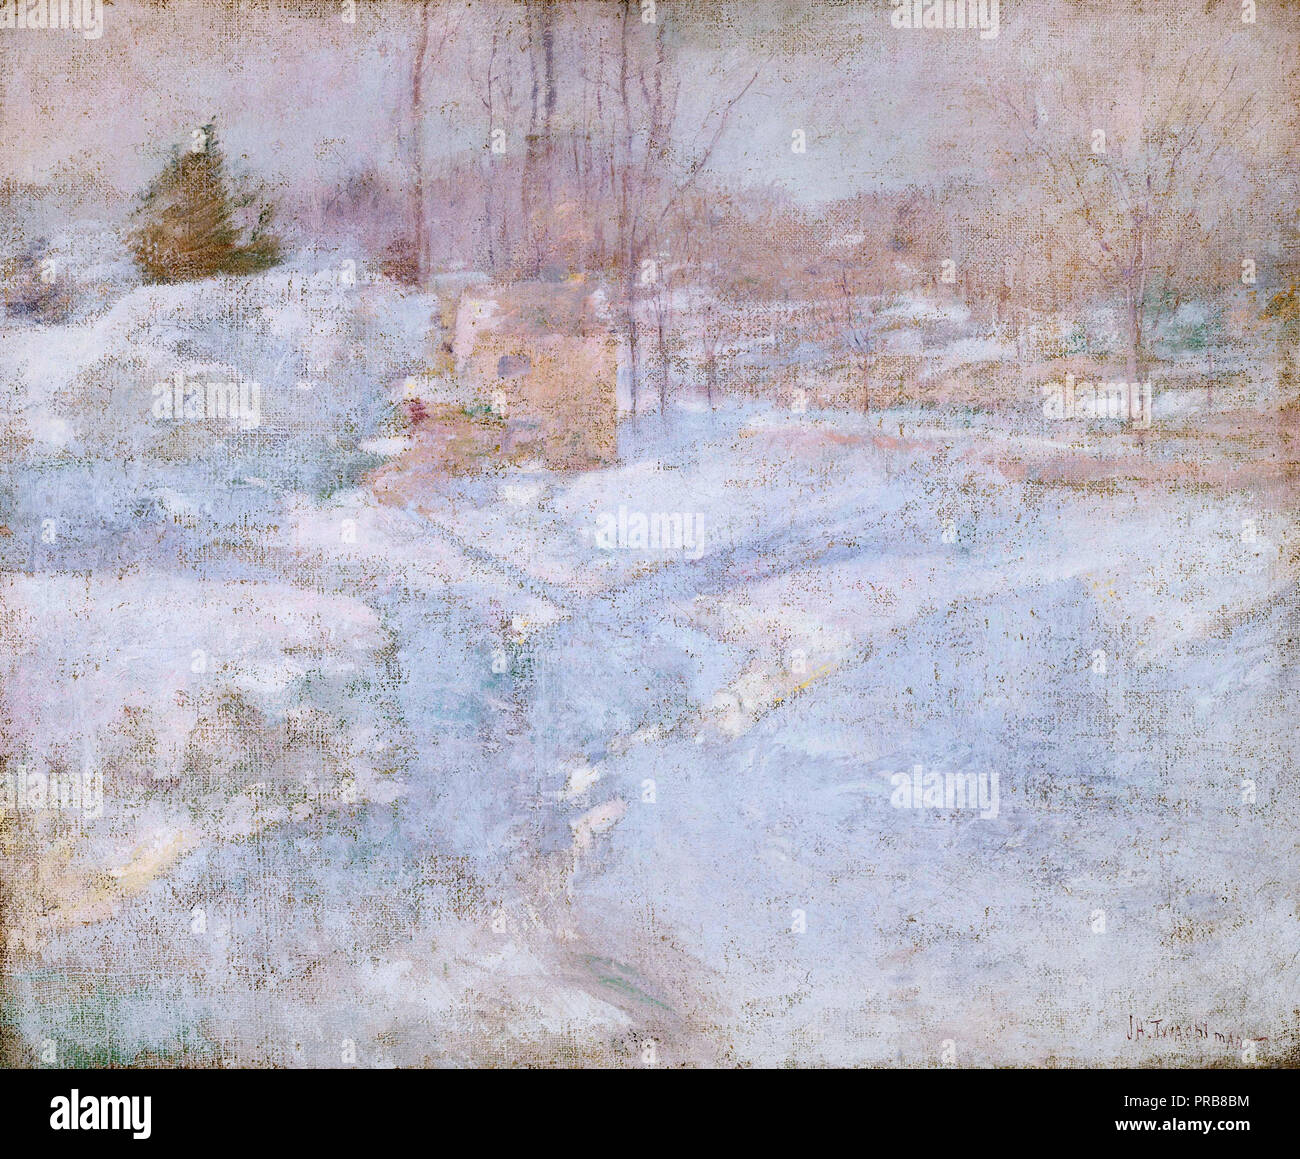 John Henry Twachtman, Winter, Undated, Oil on canvas, The Phillips Collection, Washington, D.C., USA. Stock Photo